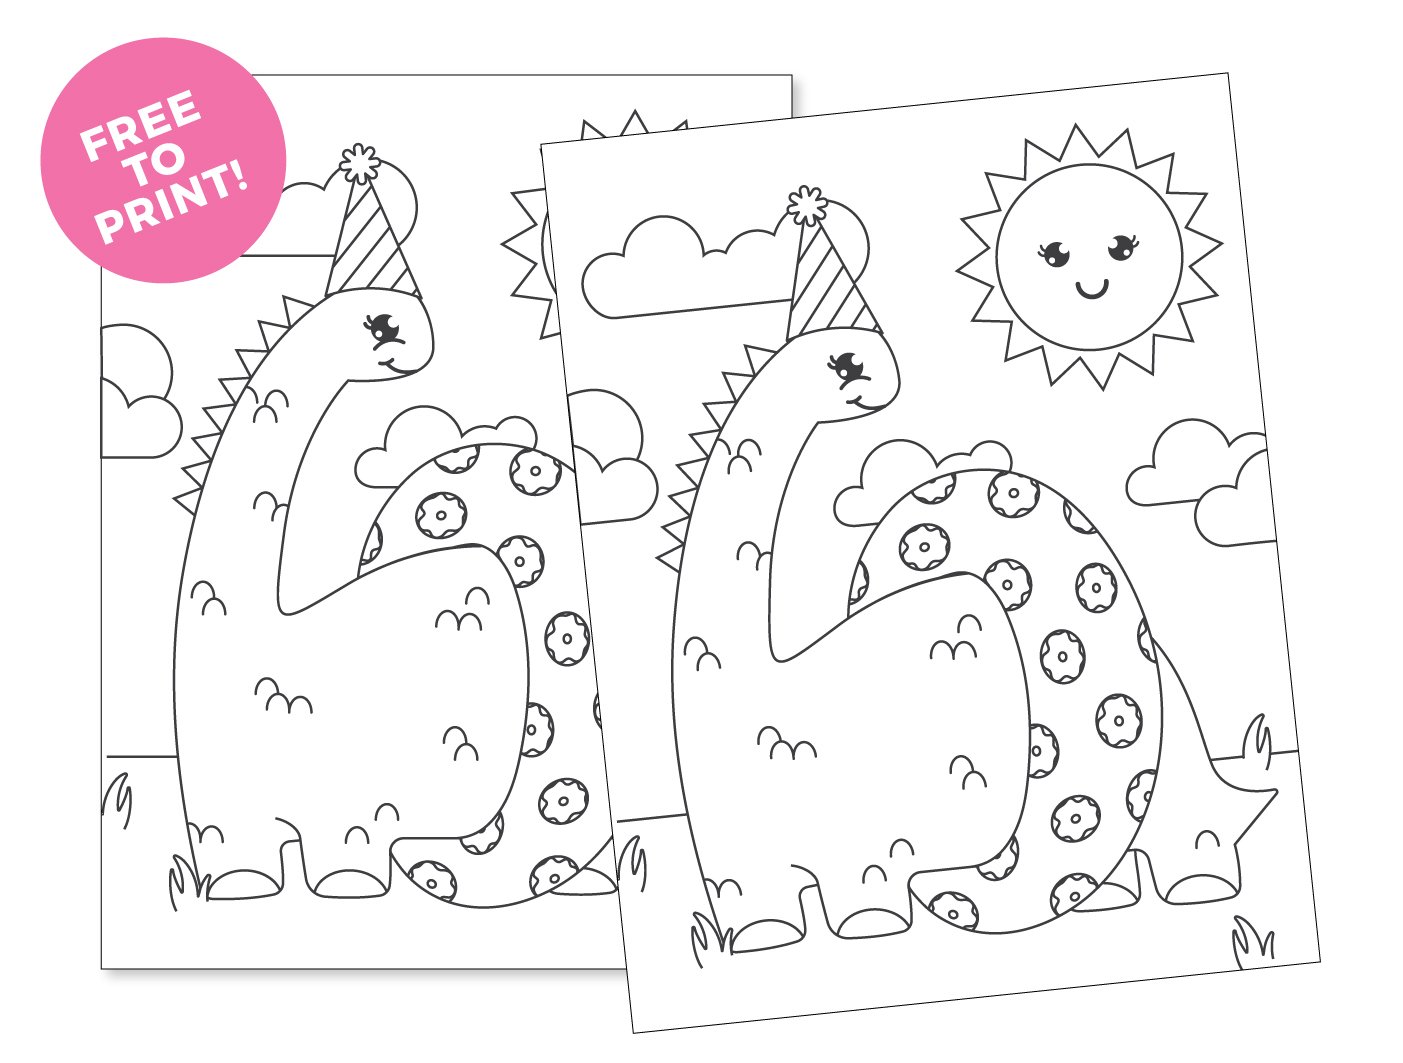 Free to print Printable Dinosaur Coloring Page